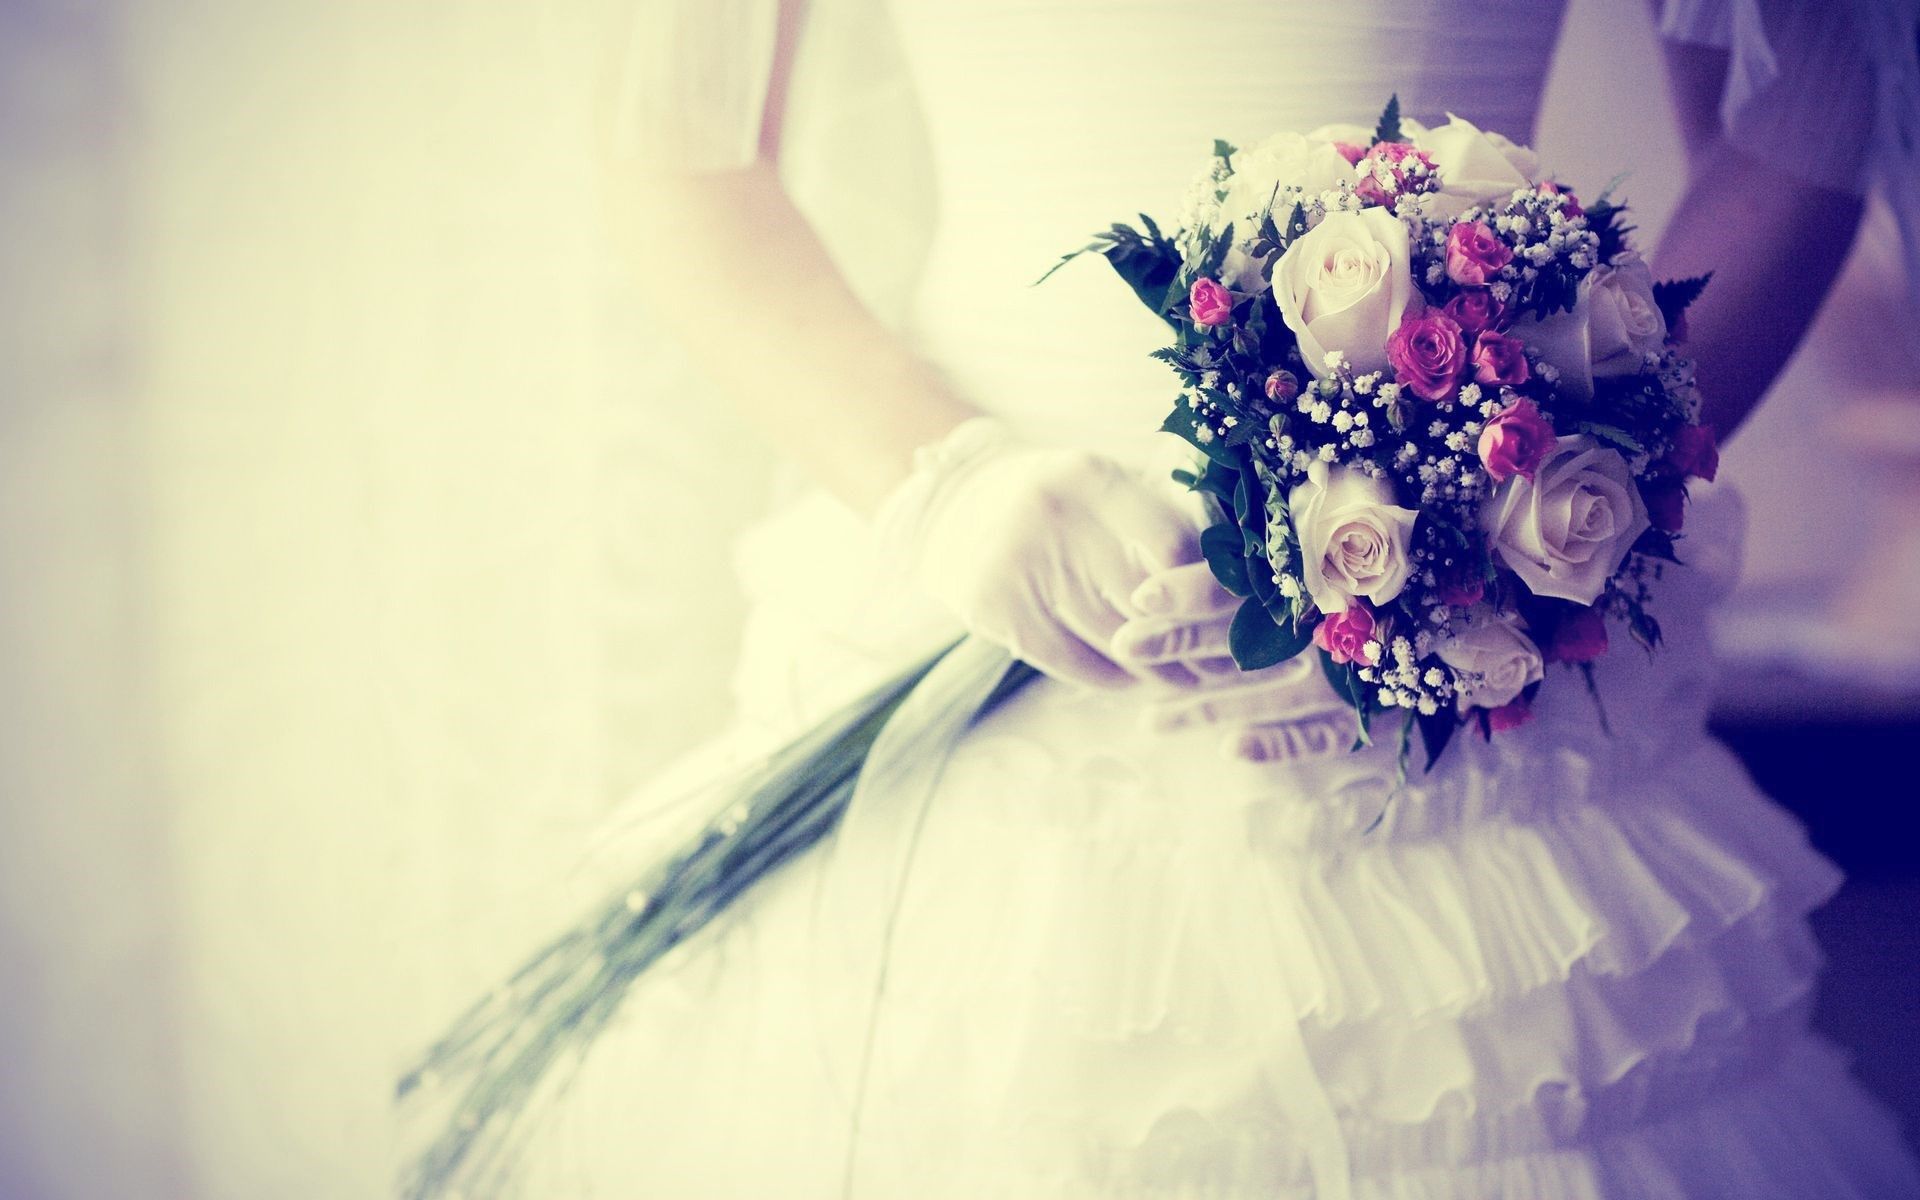 HD wallpaper, Flowers, Wedding, Bouquet, Gloves, Bride